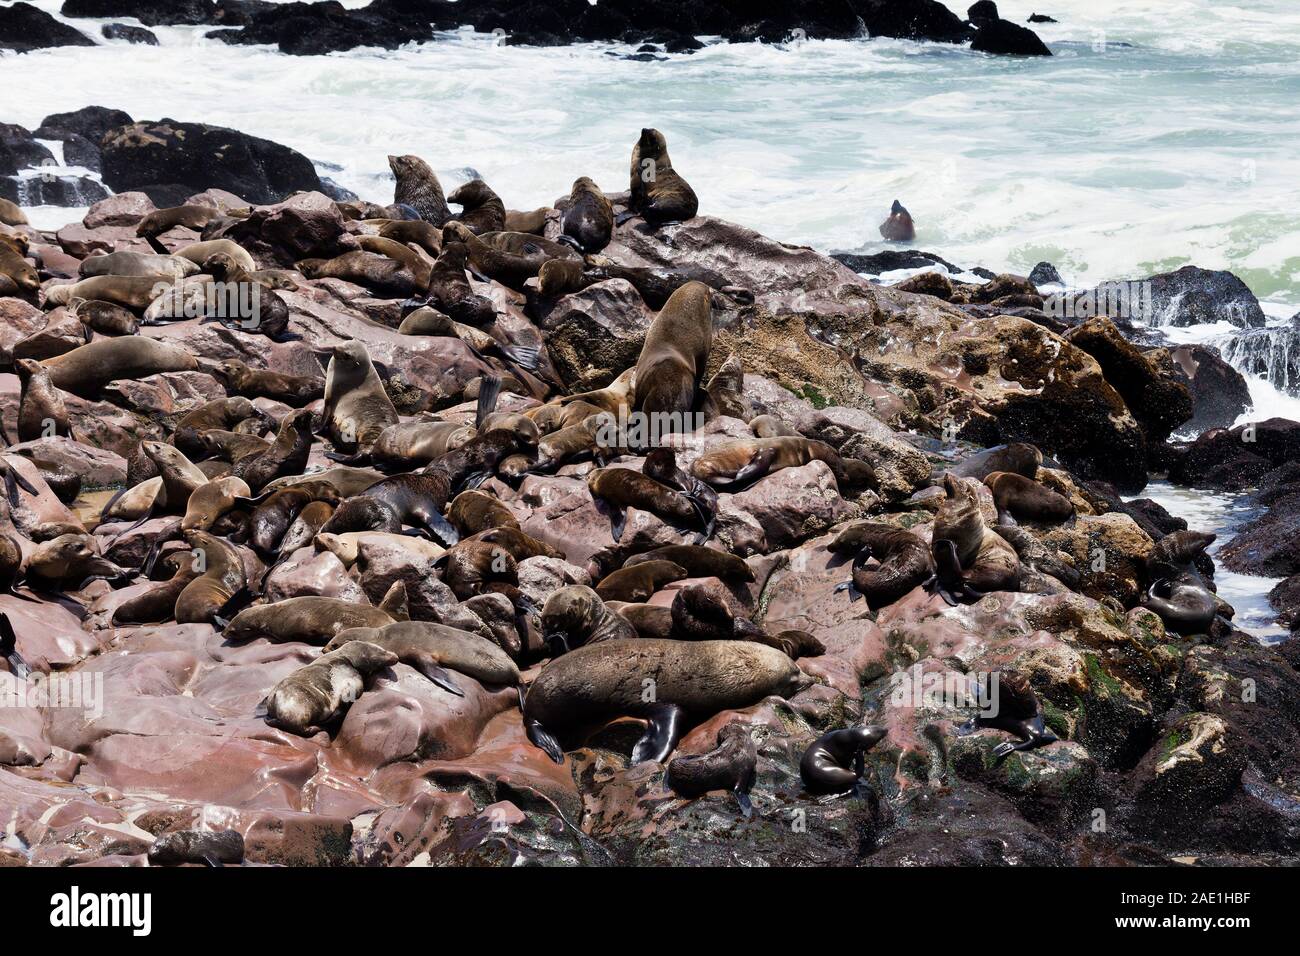 Robbenkolonie, Cape Cross Seal Reserve, Skeleton Coast, Atlantik, Namibia, Südafrika, Afrika Stockfoto